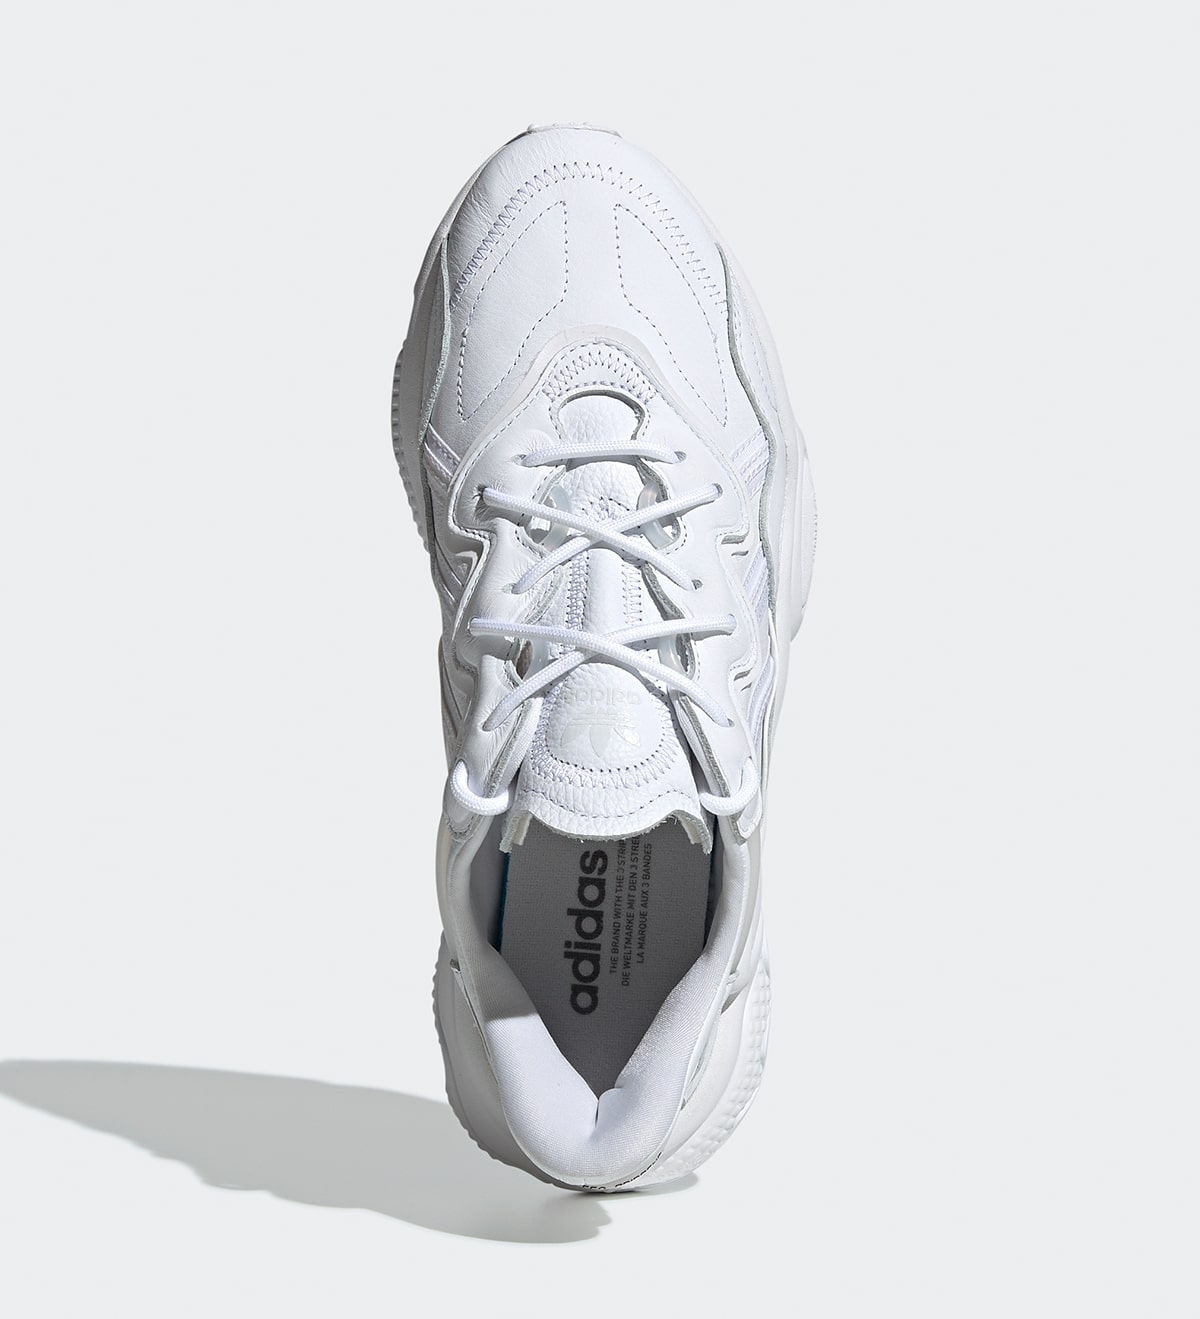 adidas originals ozweego sneakers in triple white